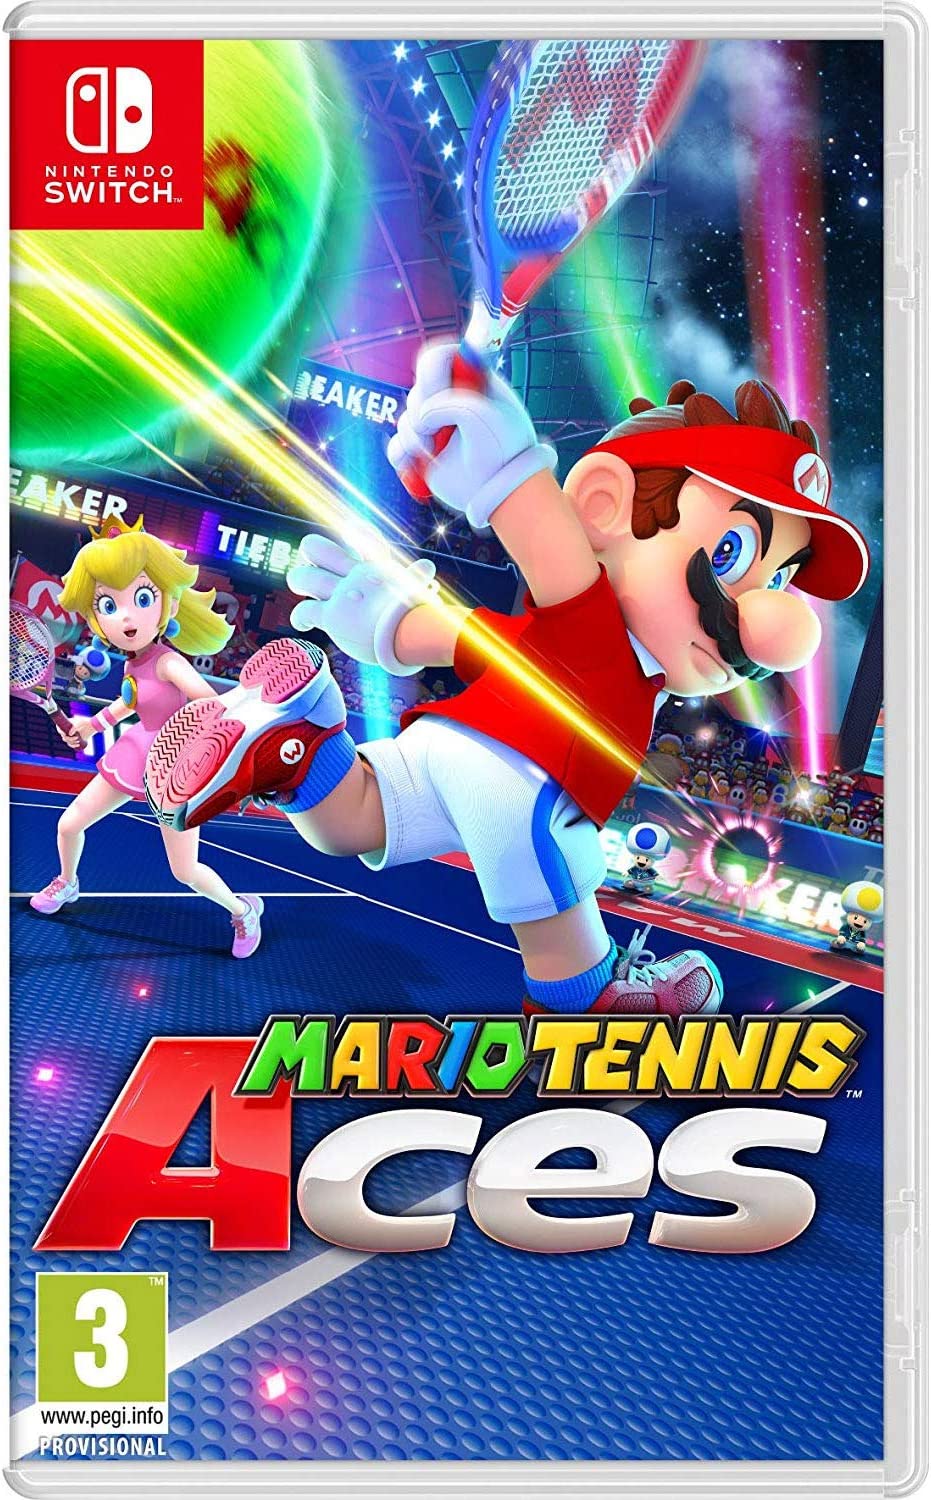 Mario Tennis Aces Nintendo Switch artwork.